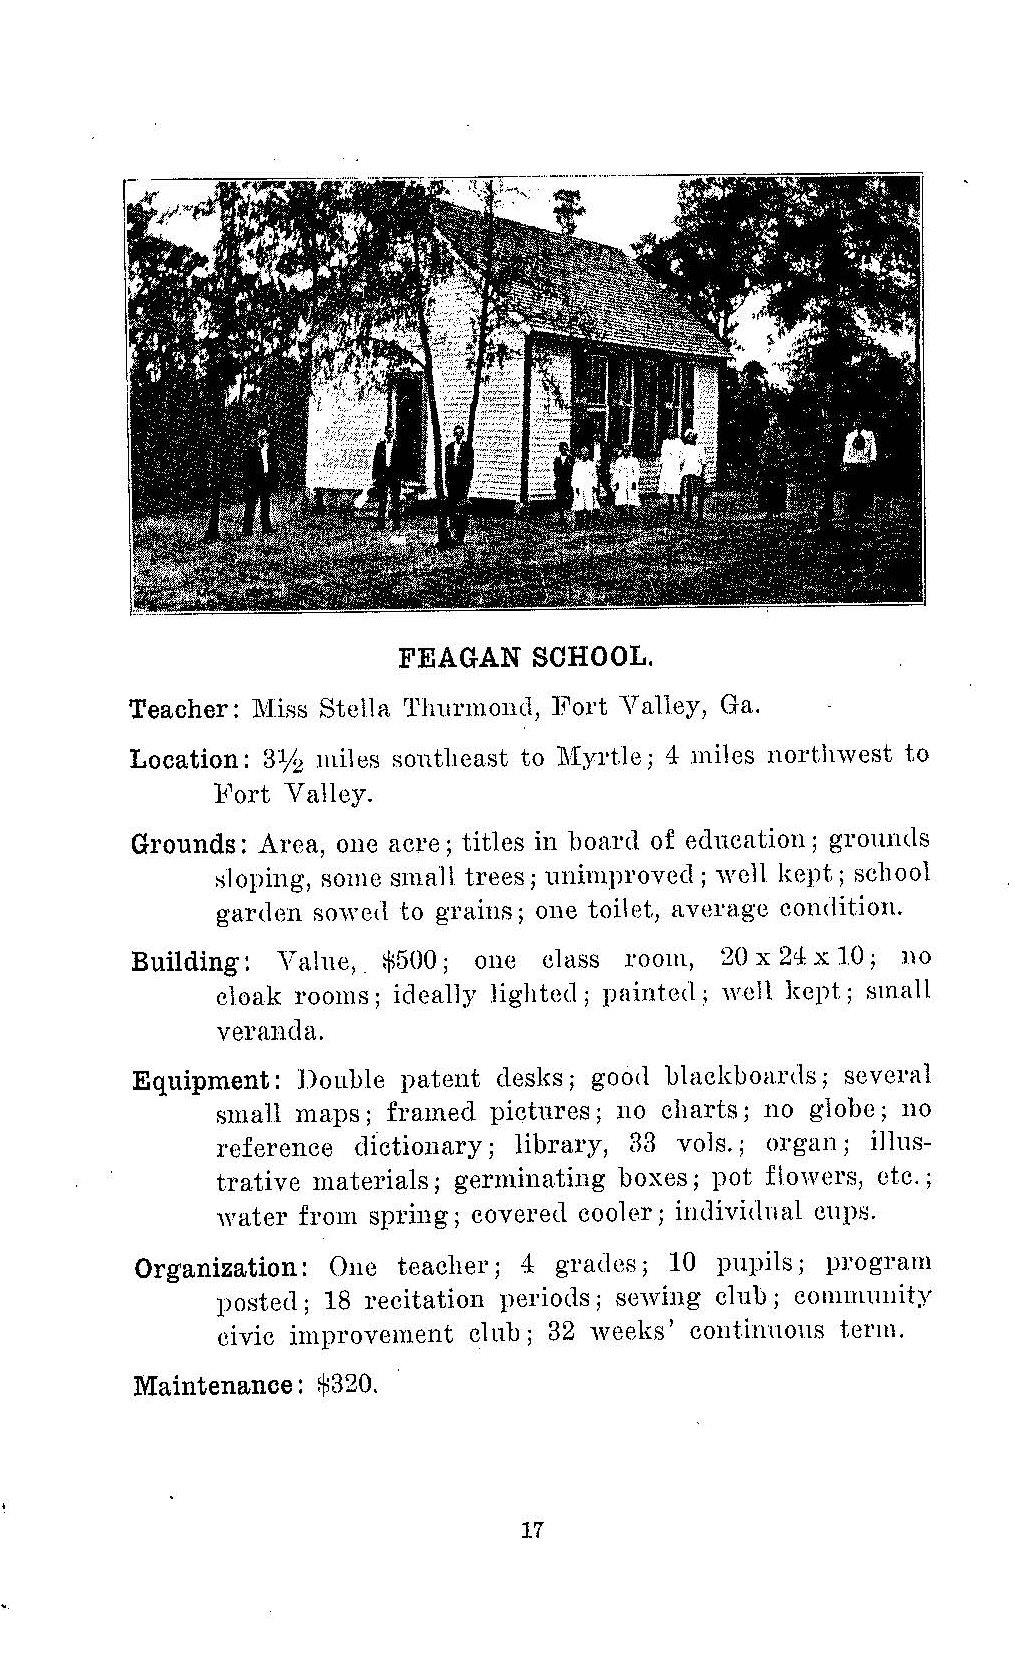 Feagan School